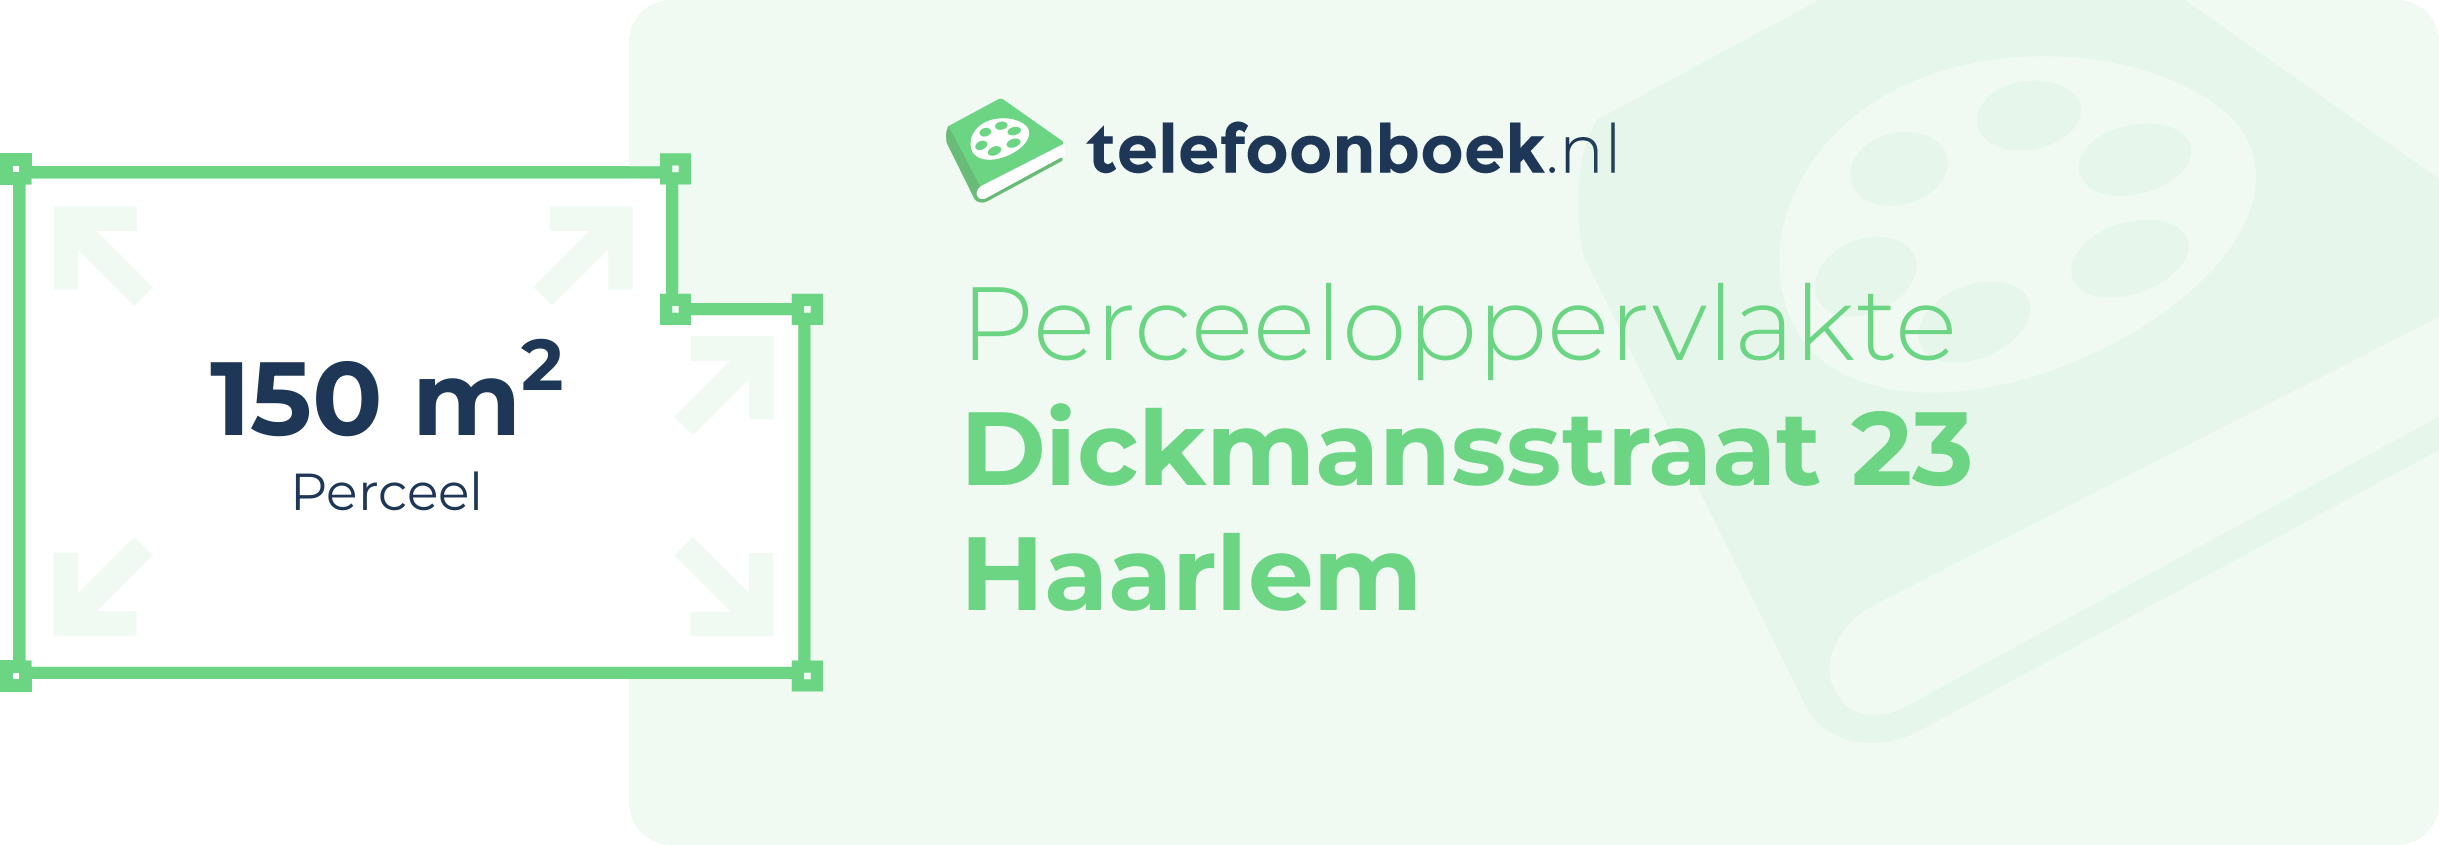 Perceeloppervlakte Dickmansstraat 23 Haarlem